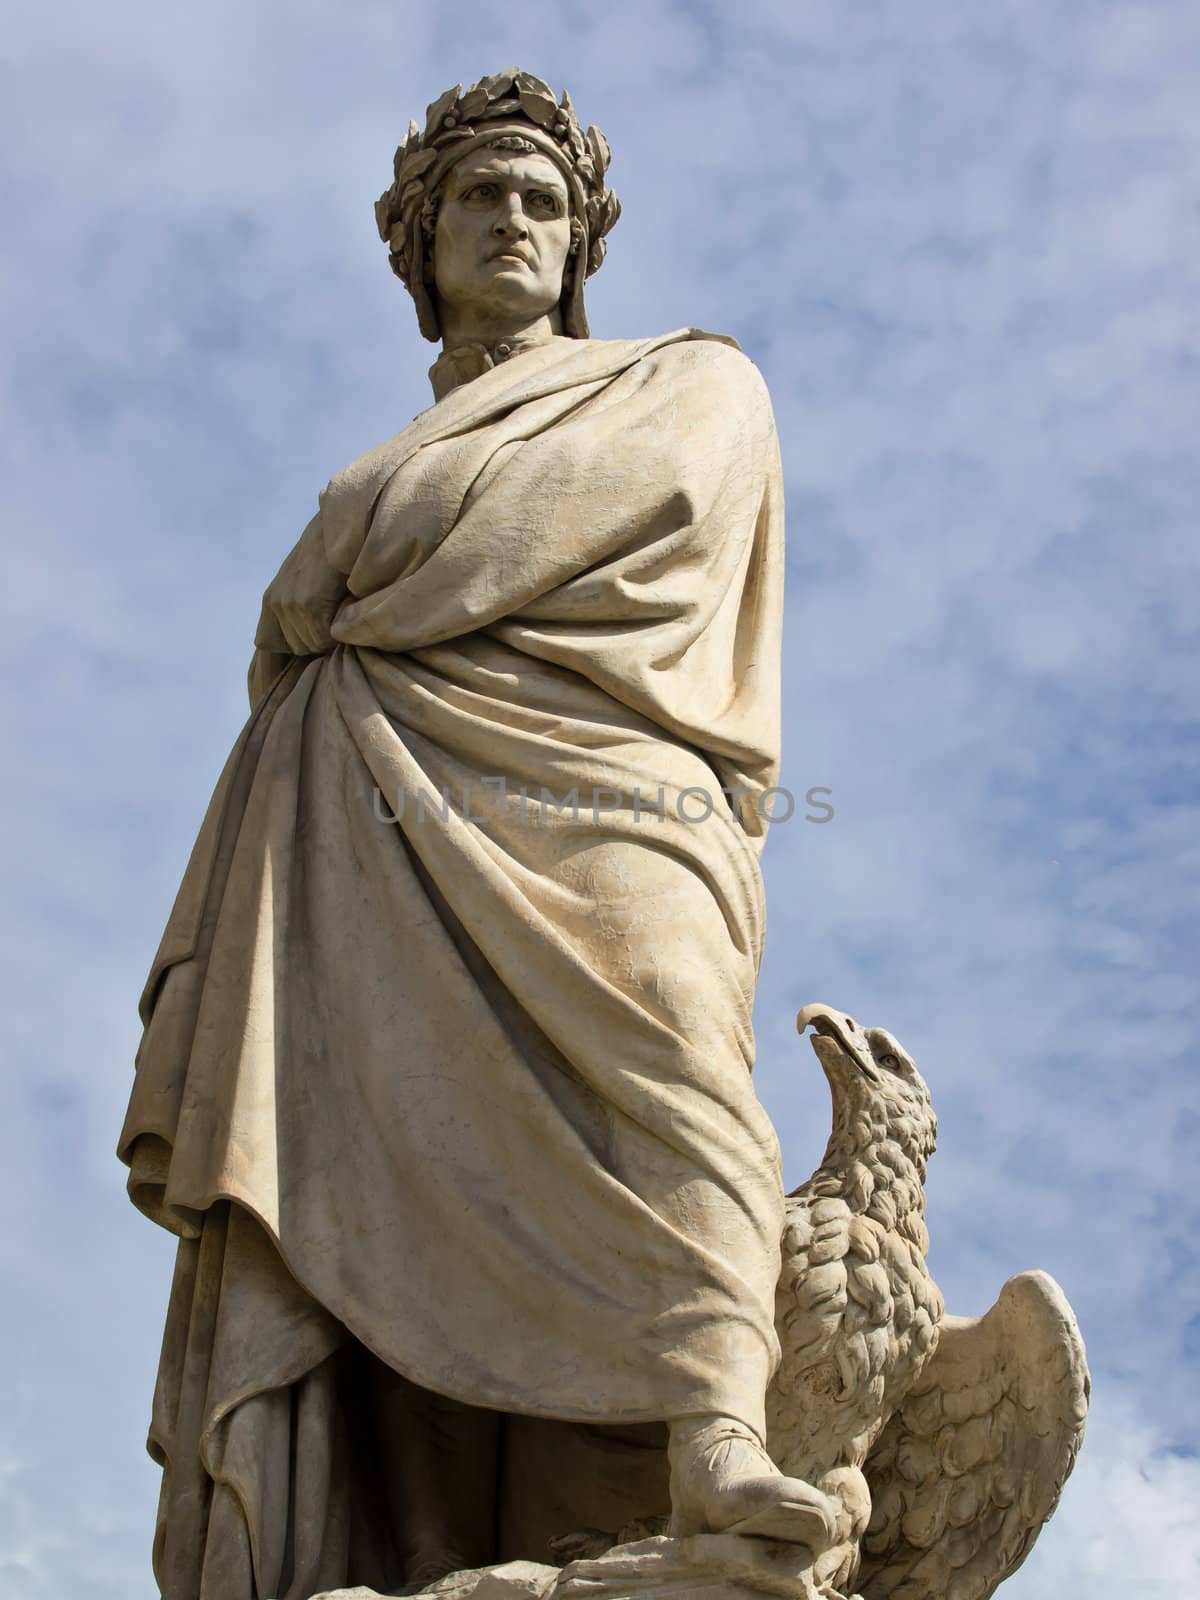 sculpture of dante alighieri in florence italy